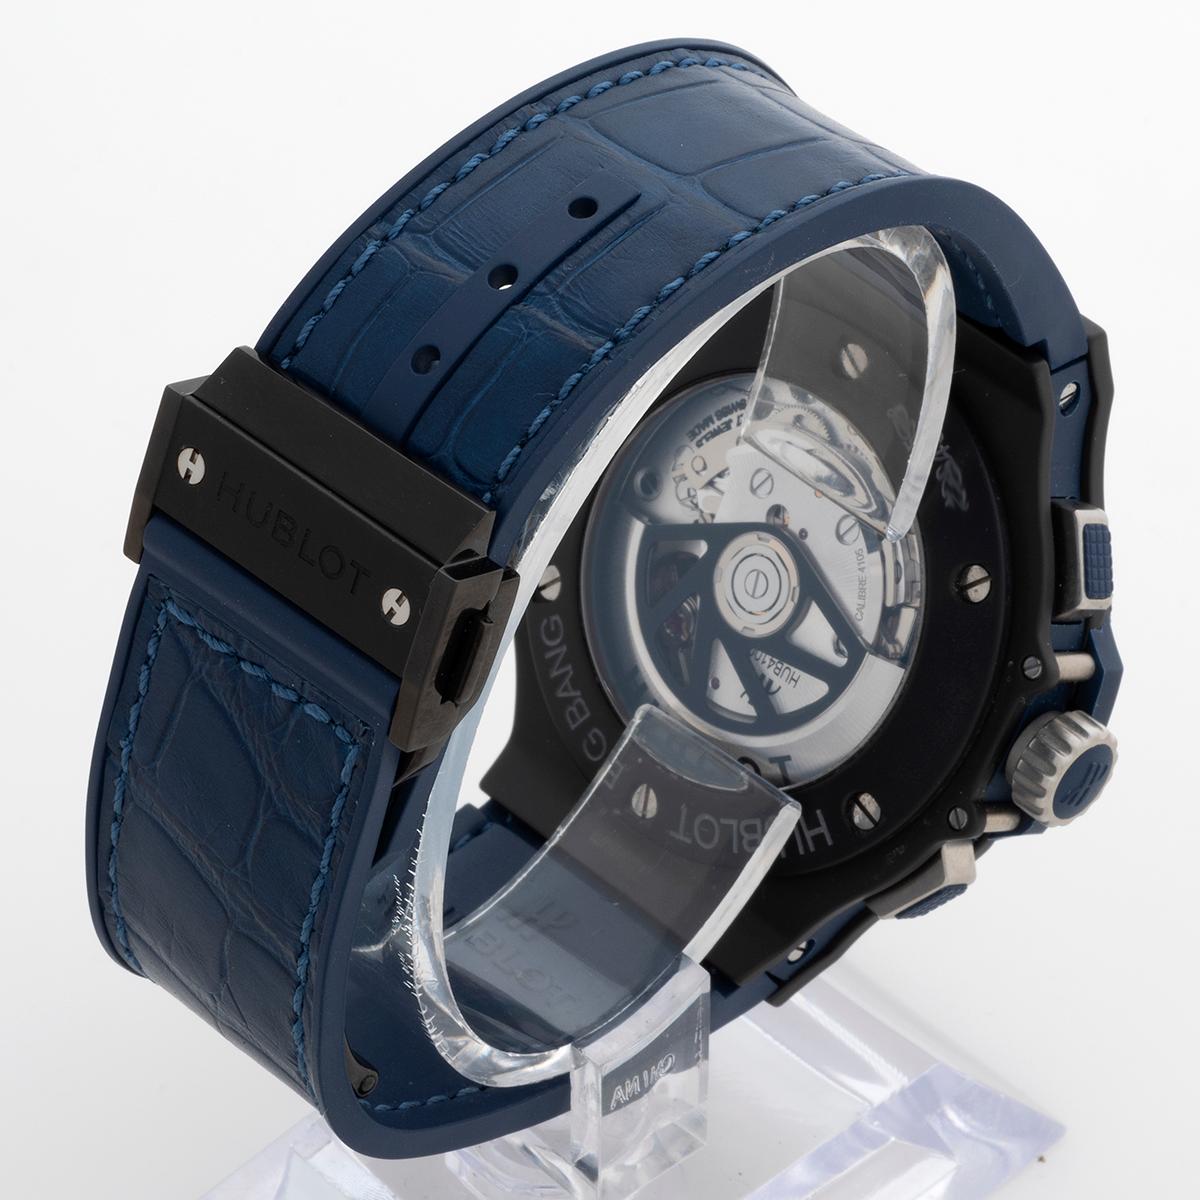 Hublot Big Bang Blue Chronograph Wristwatch. Ceramic Case/Bezel. Exhibition C/B. 1